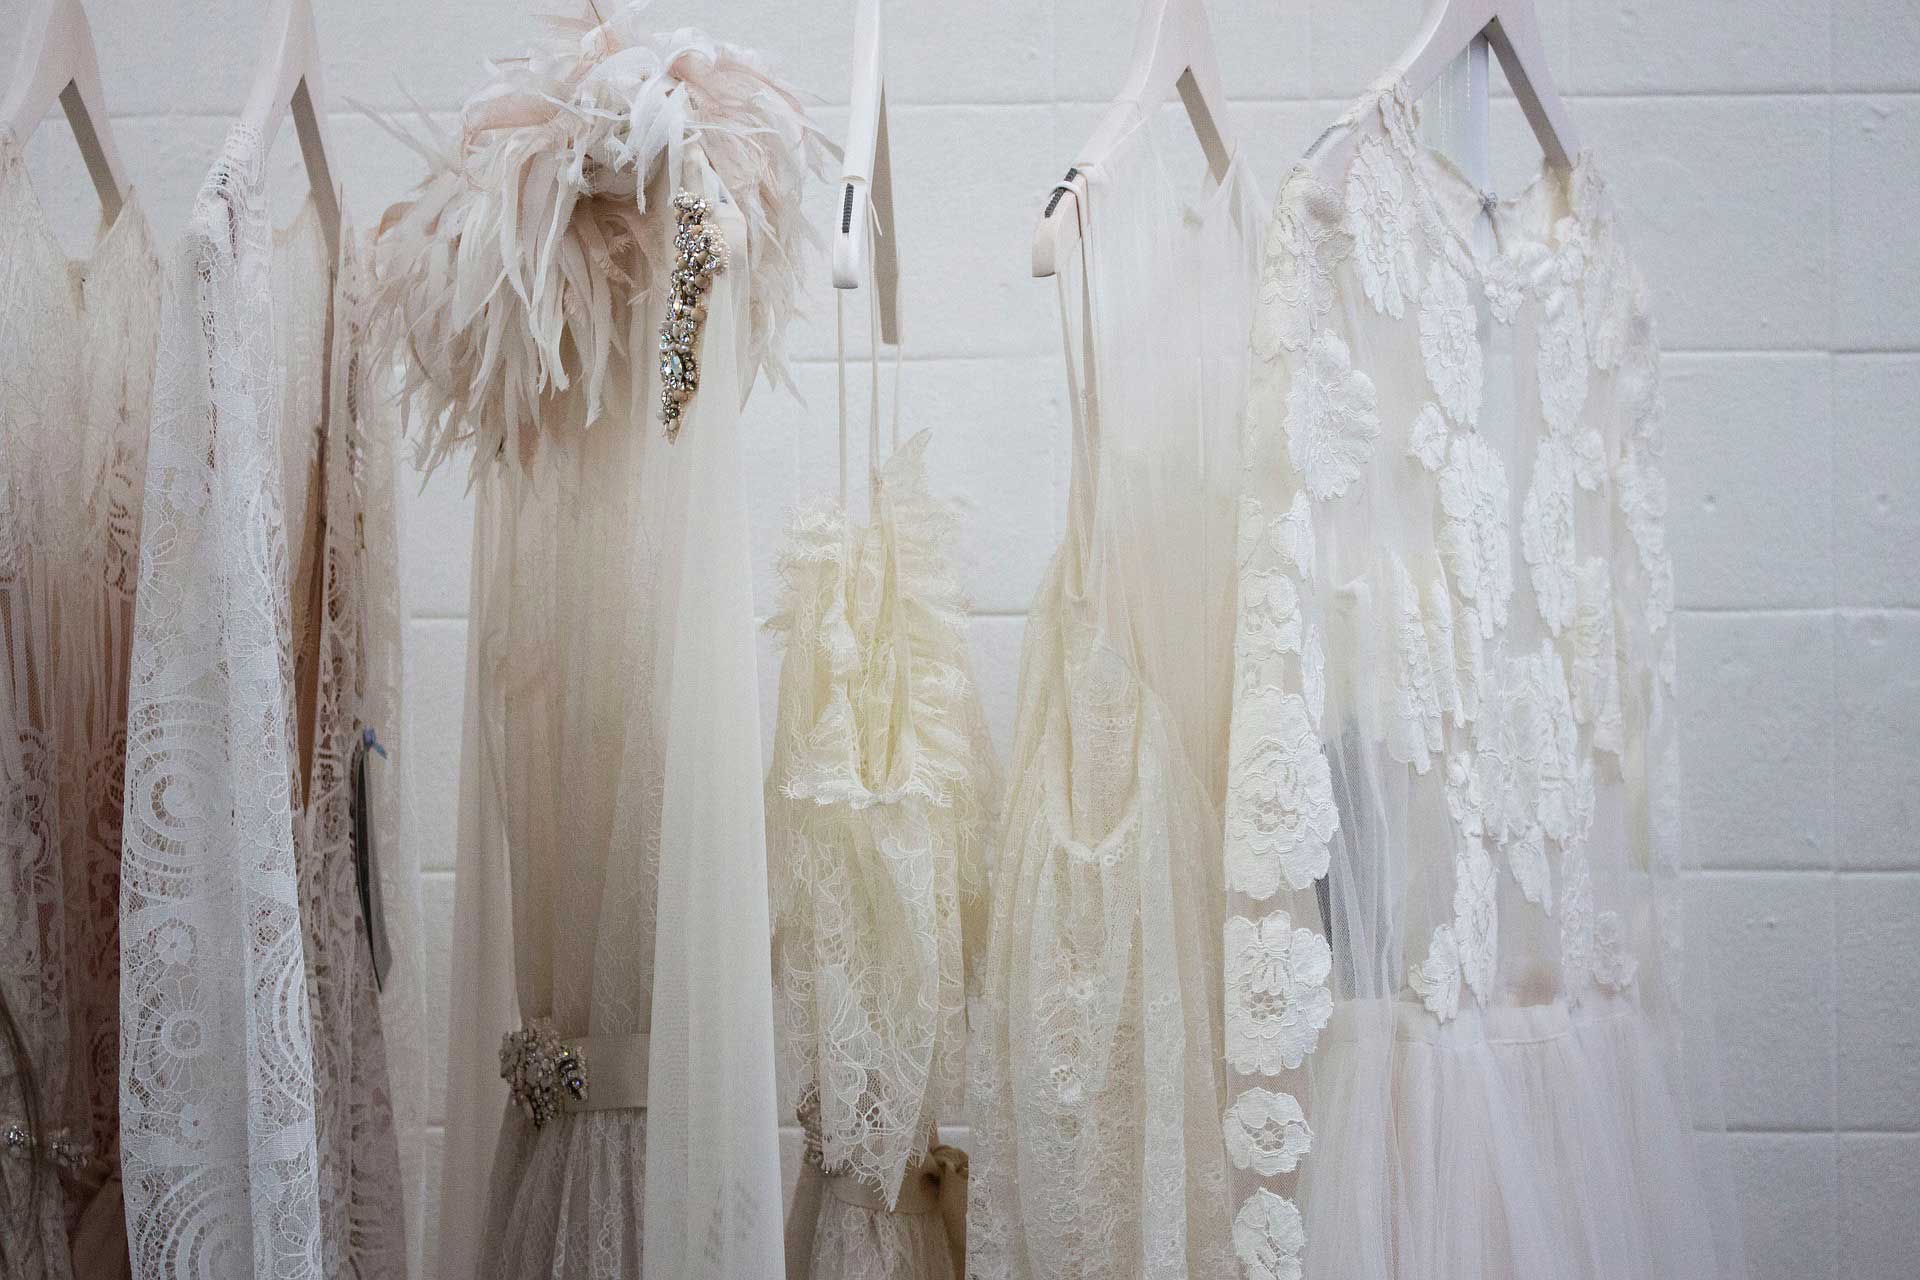 Pretty dresses hanging on a wardrobe rack